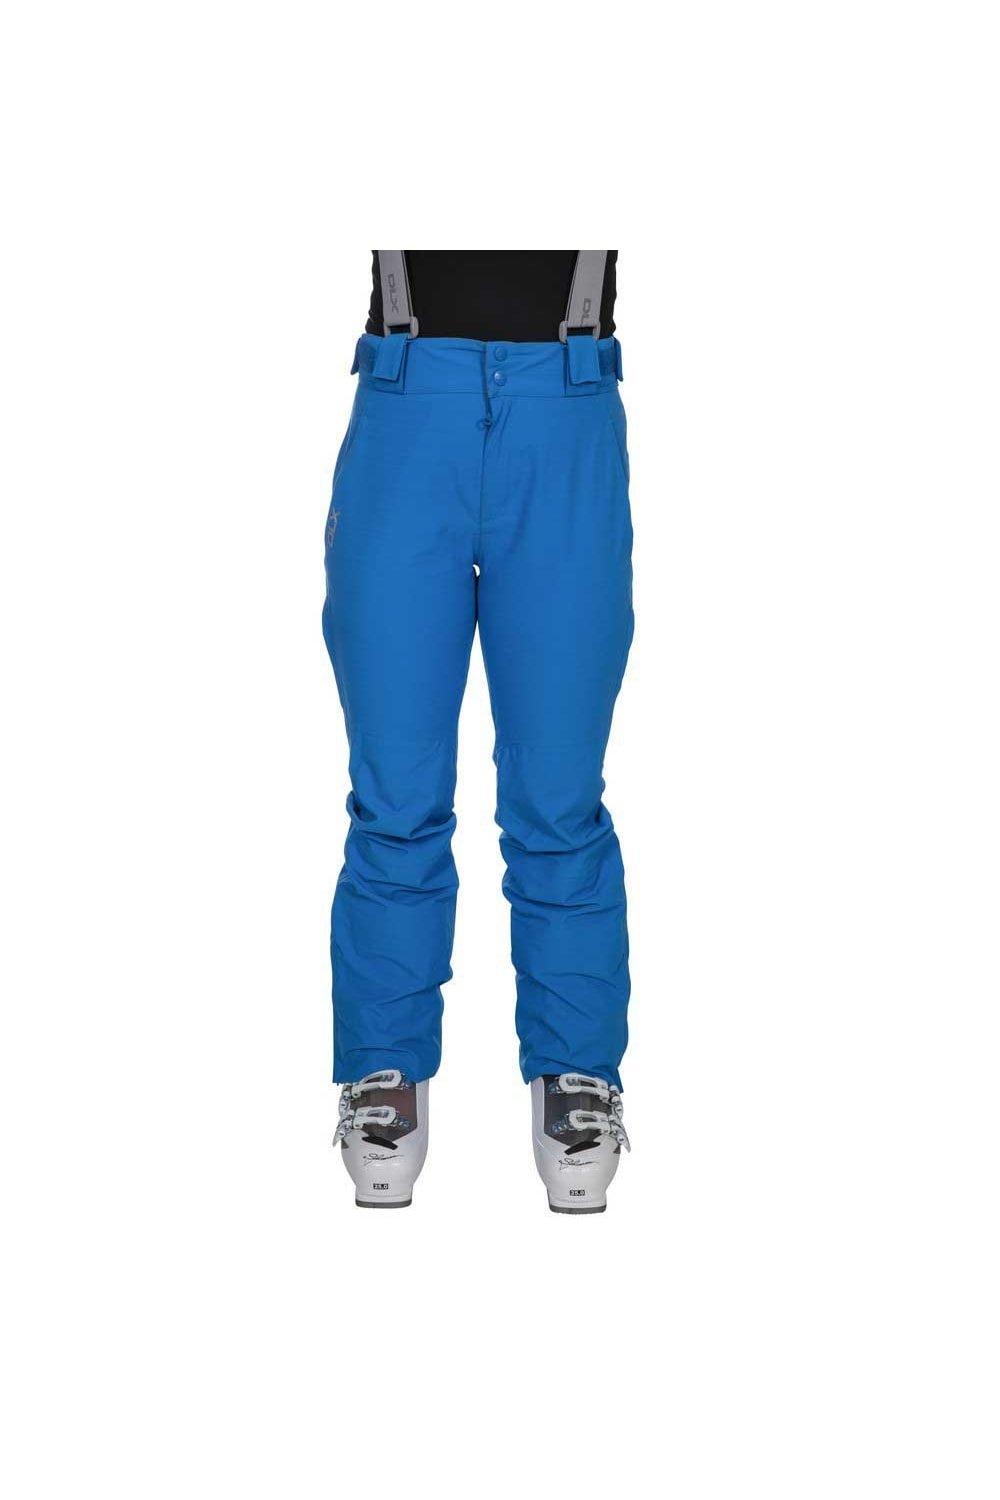 Trespass Women's Jacinta DLX Ski Salopettes Trousers|Size: XXS|blue